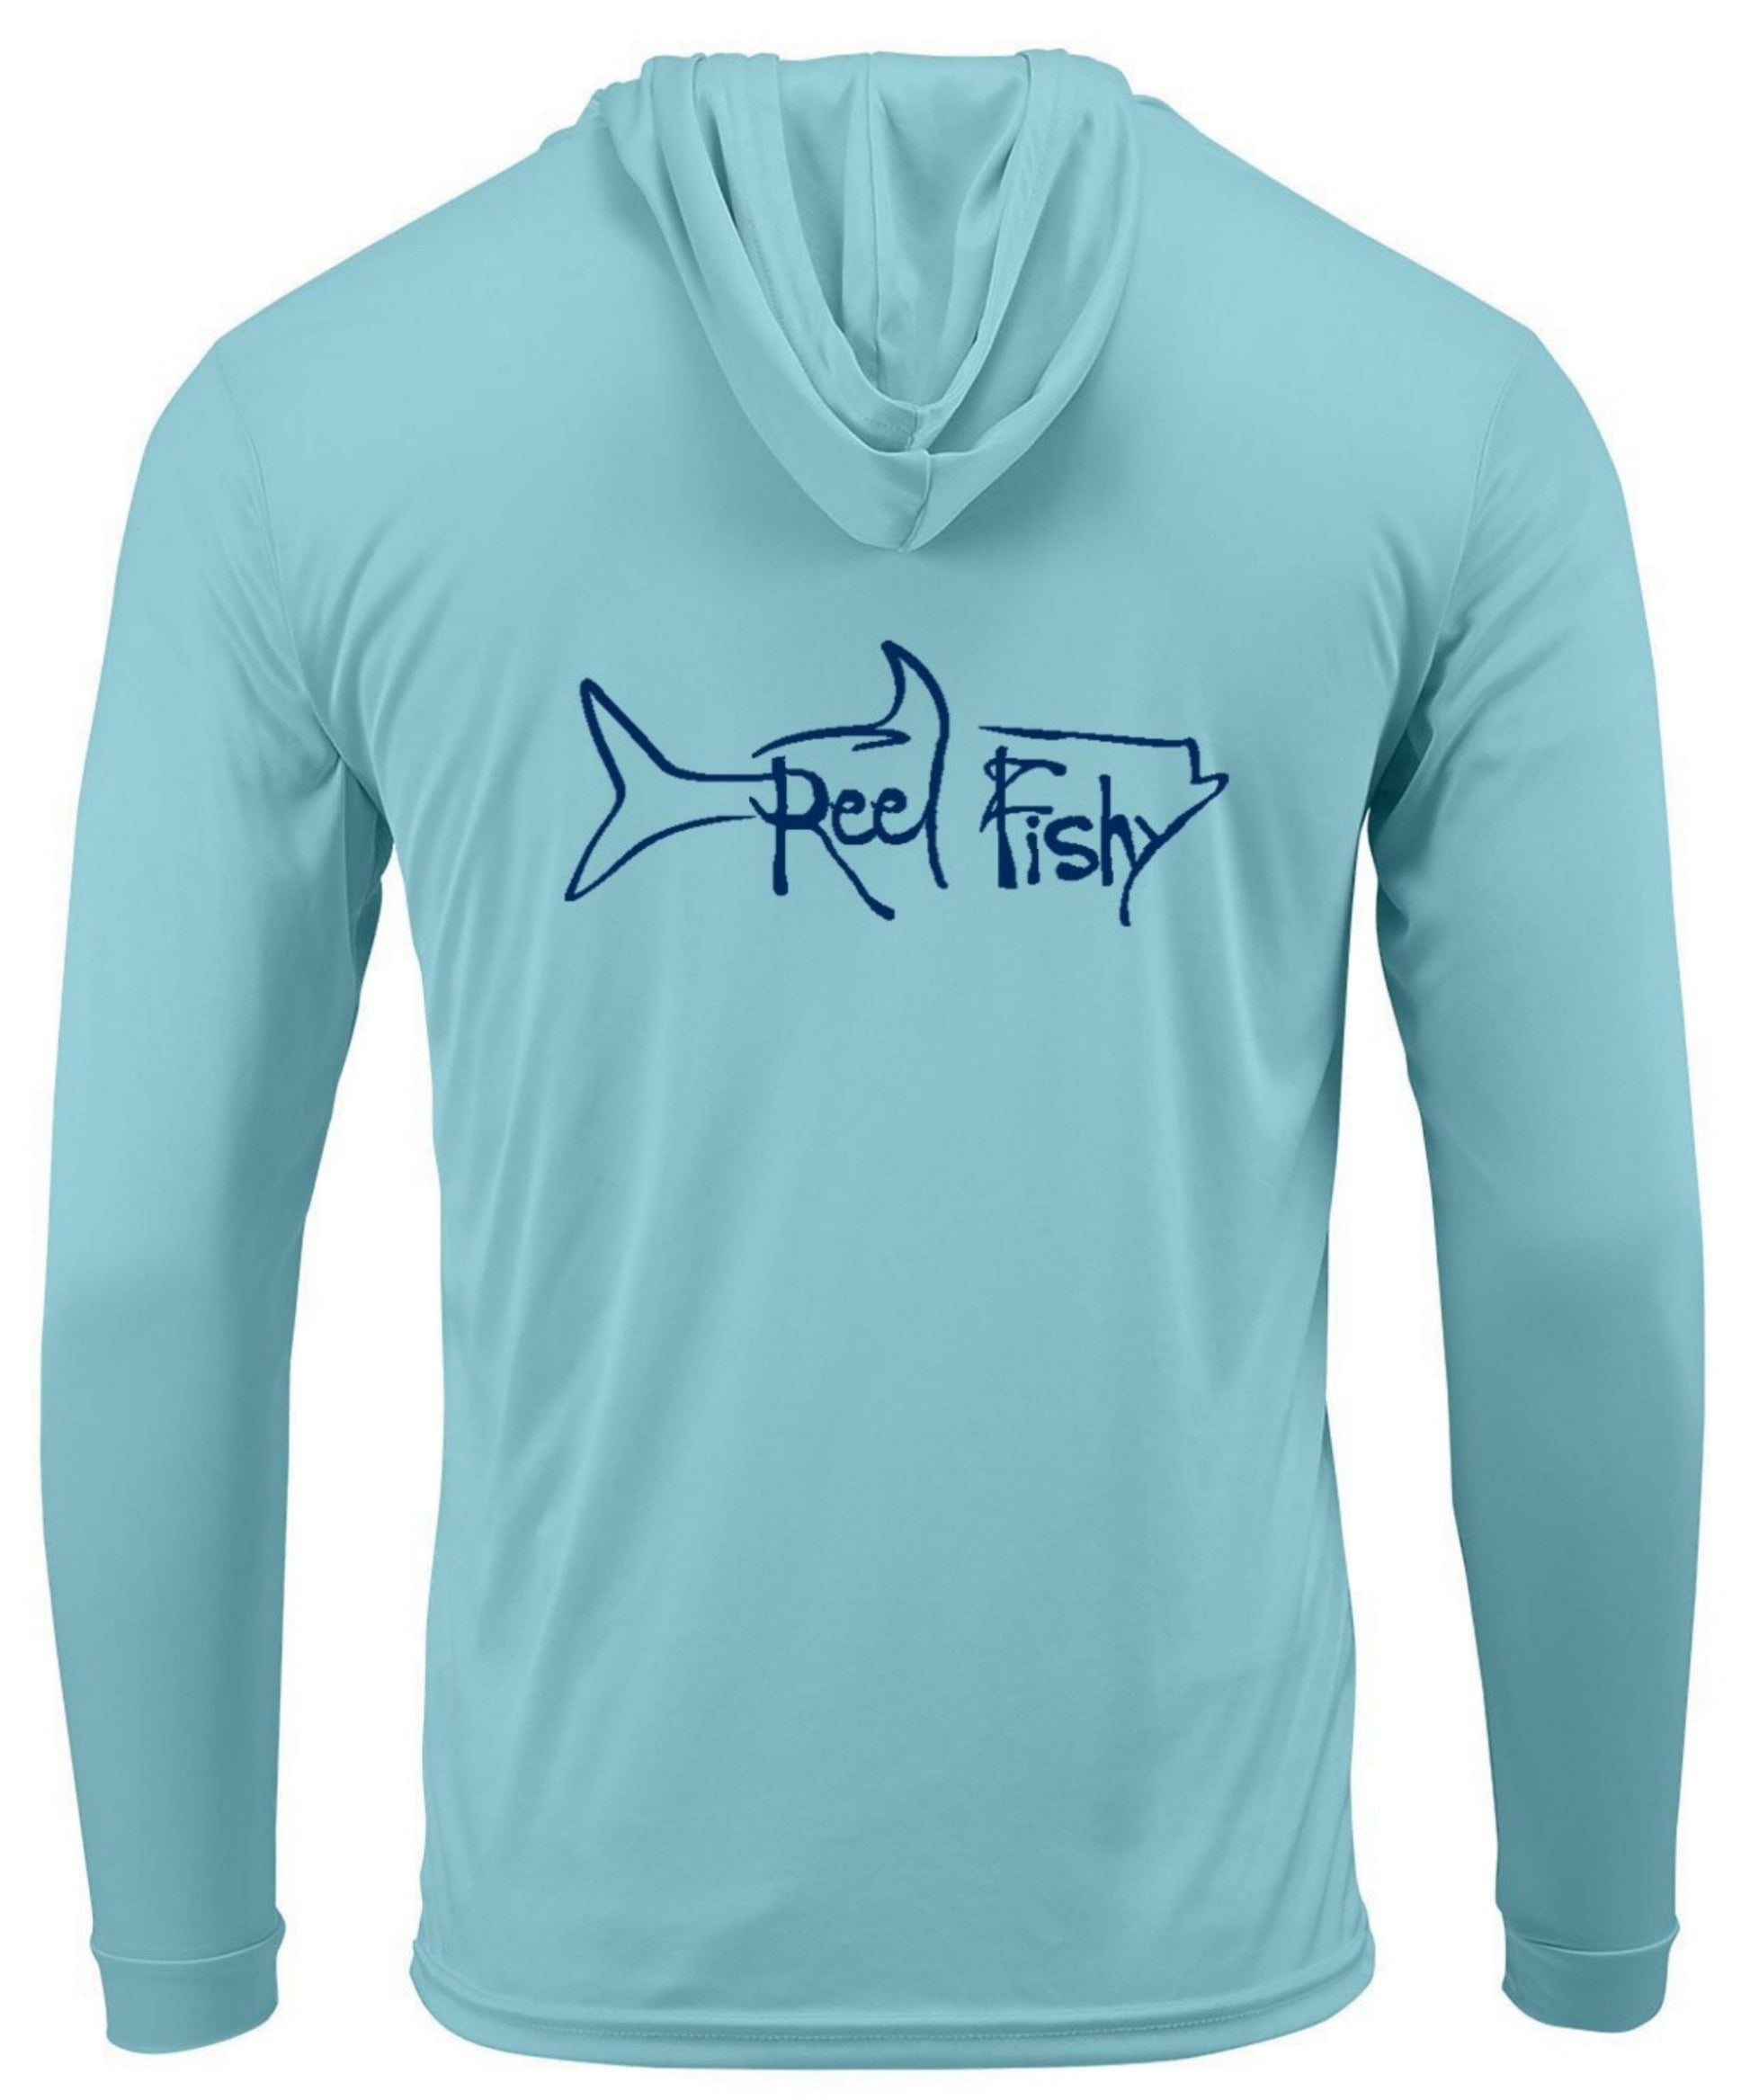 Aqua Blue Tarpon Hoodie Performance Dry-Fit Fishing Long Sleeve Shirts, 50+ UPF Sun Protection  - Reel Fishy Apparel